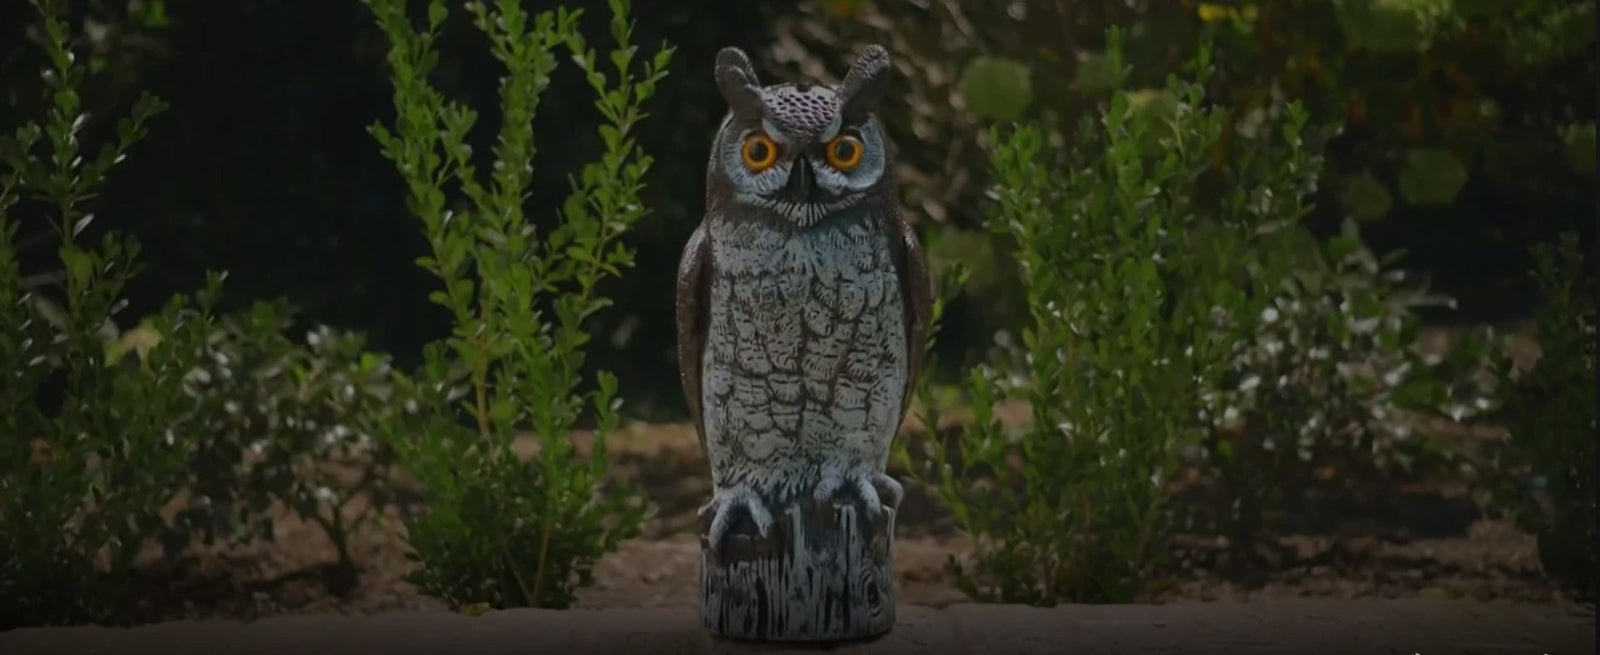 Big Head Owl Charms